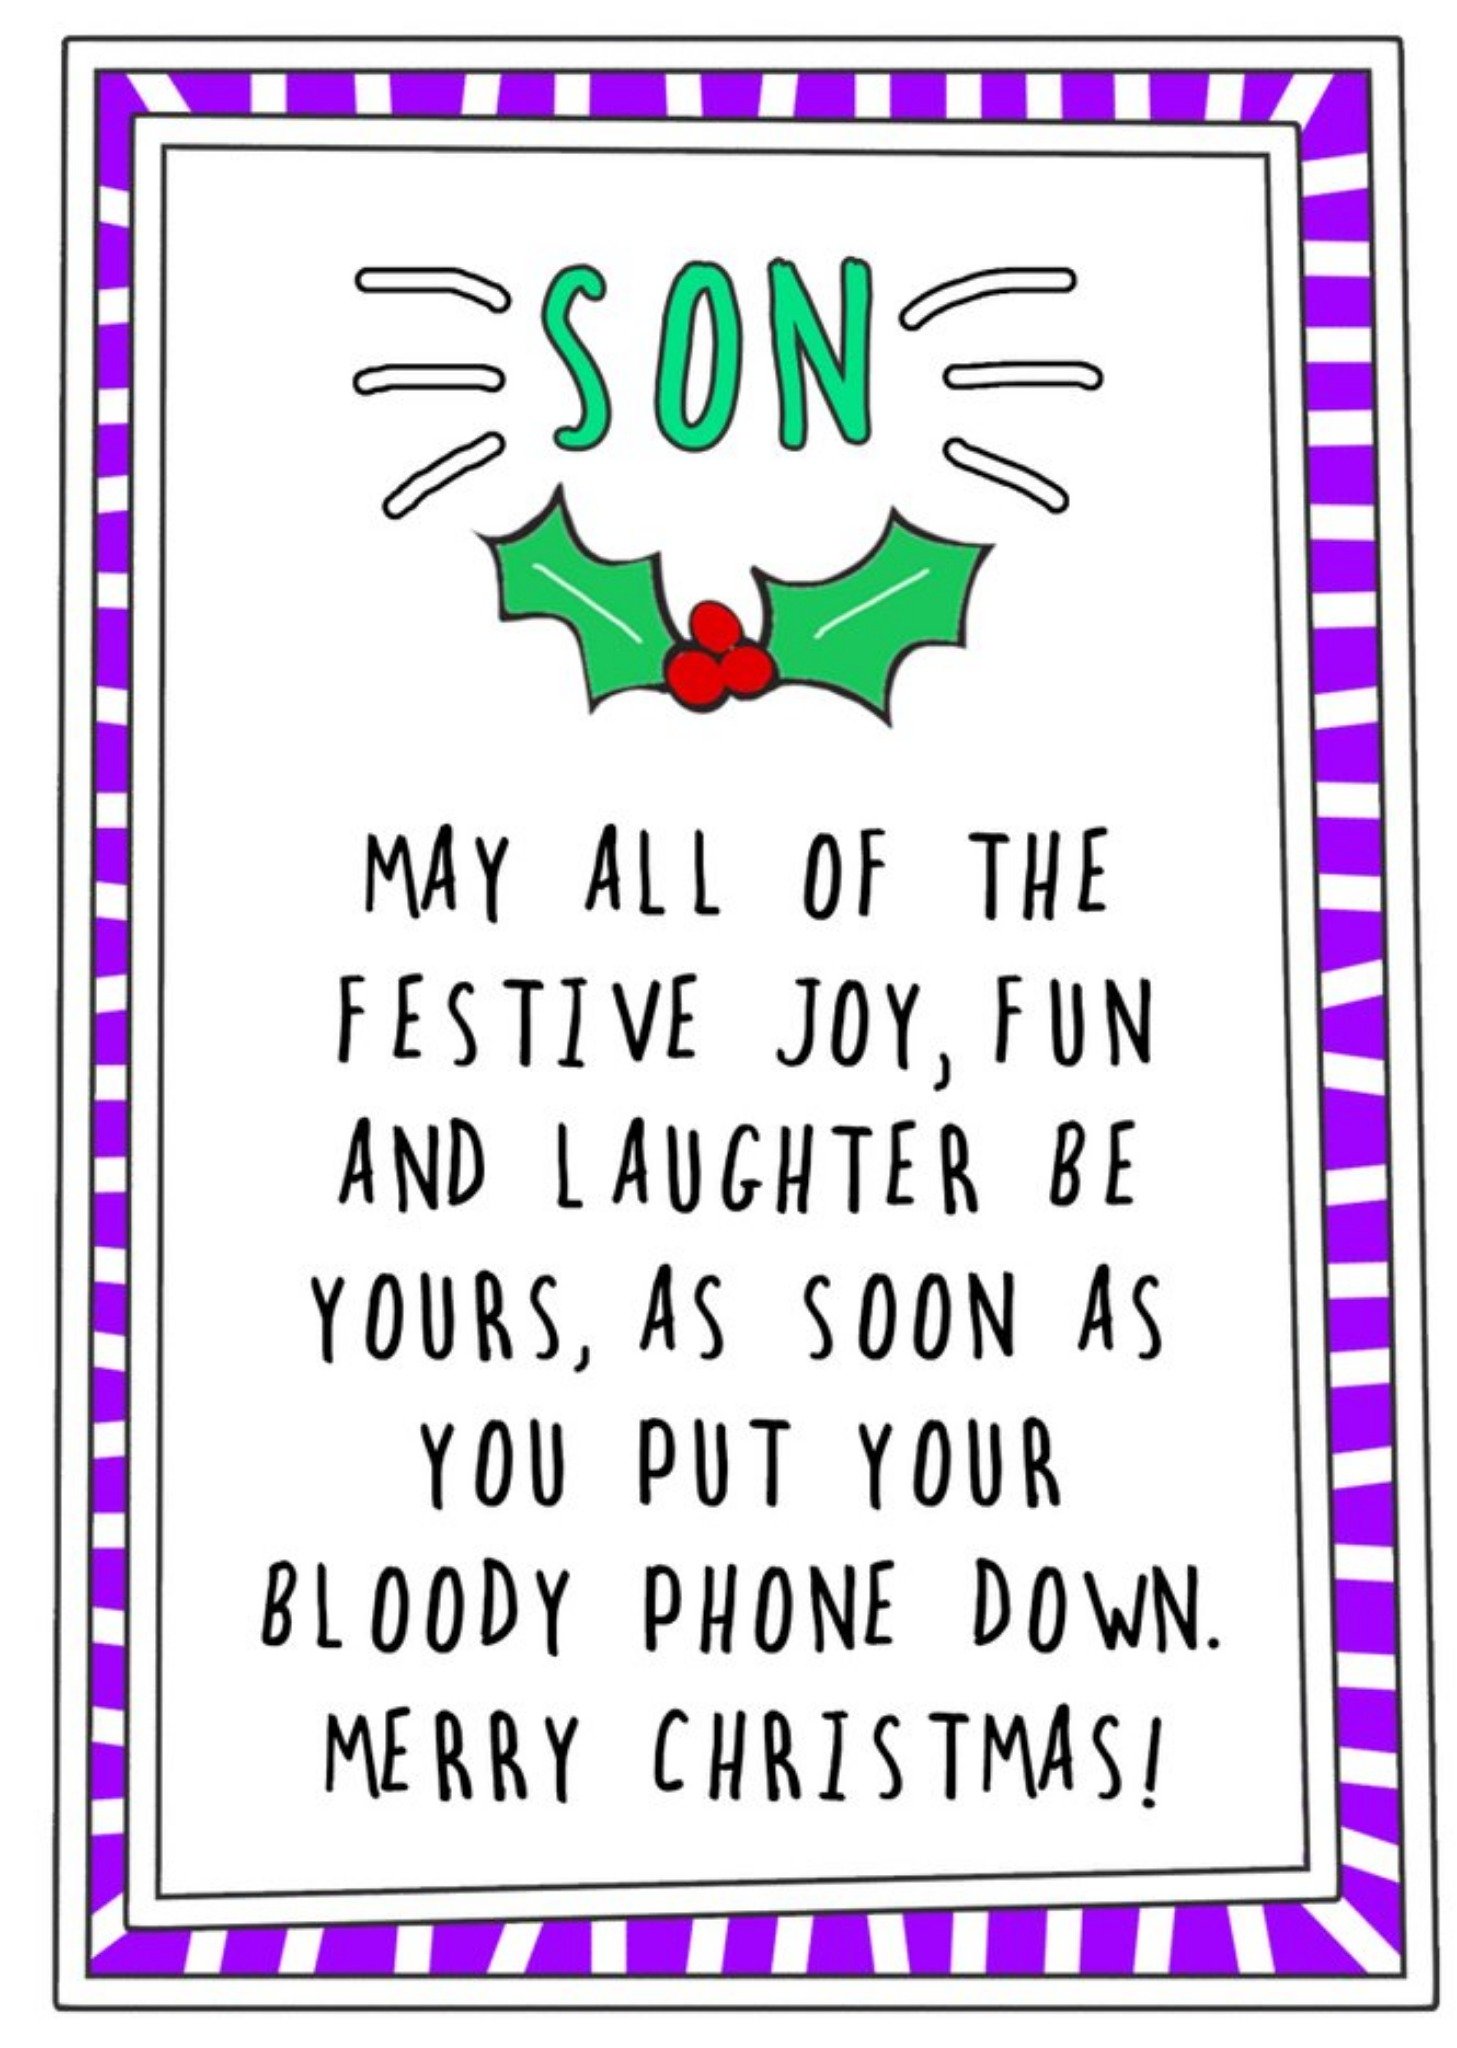 Go La La Funny Son Put Your Phone Down Merry Christmas Card Ecard